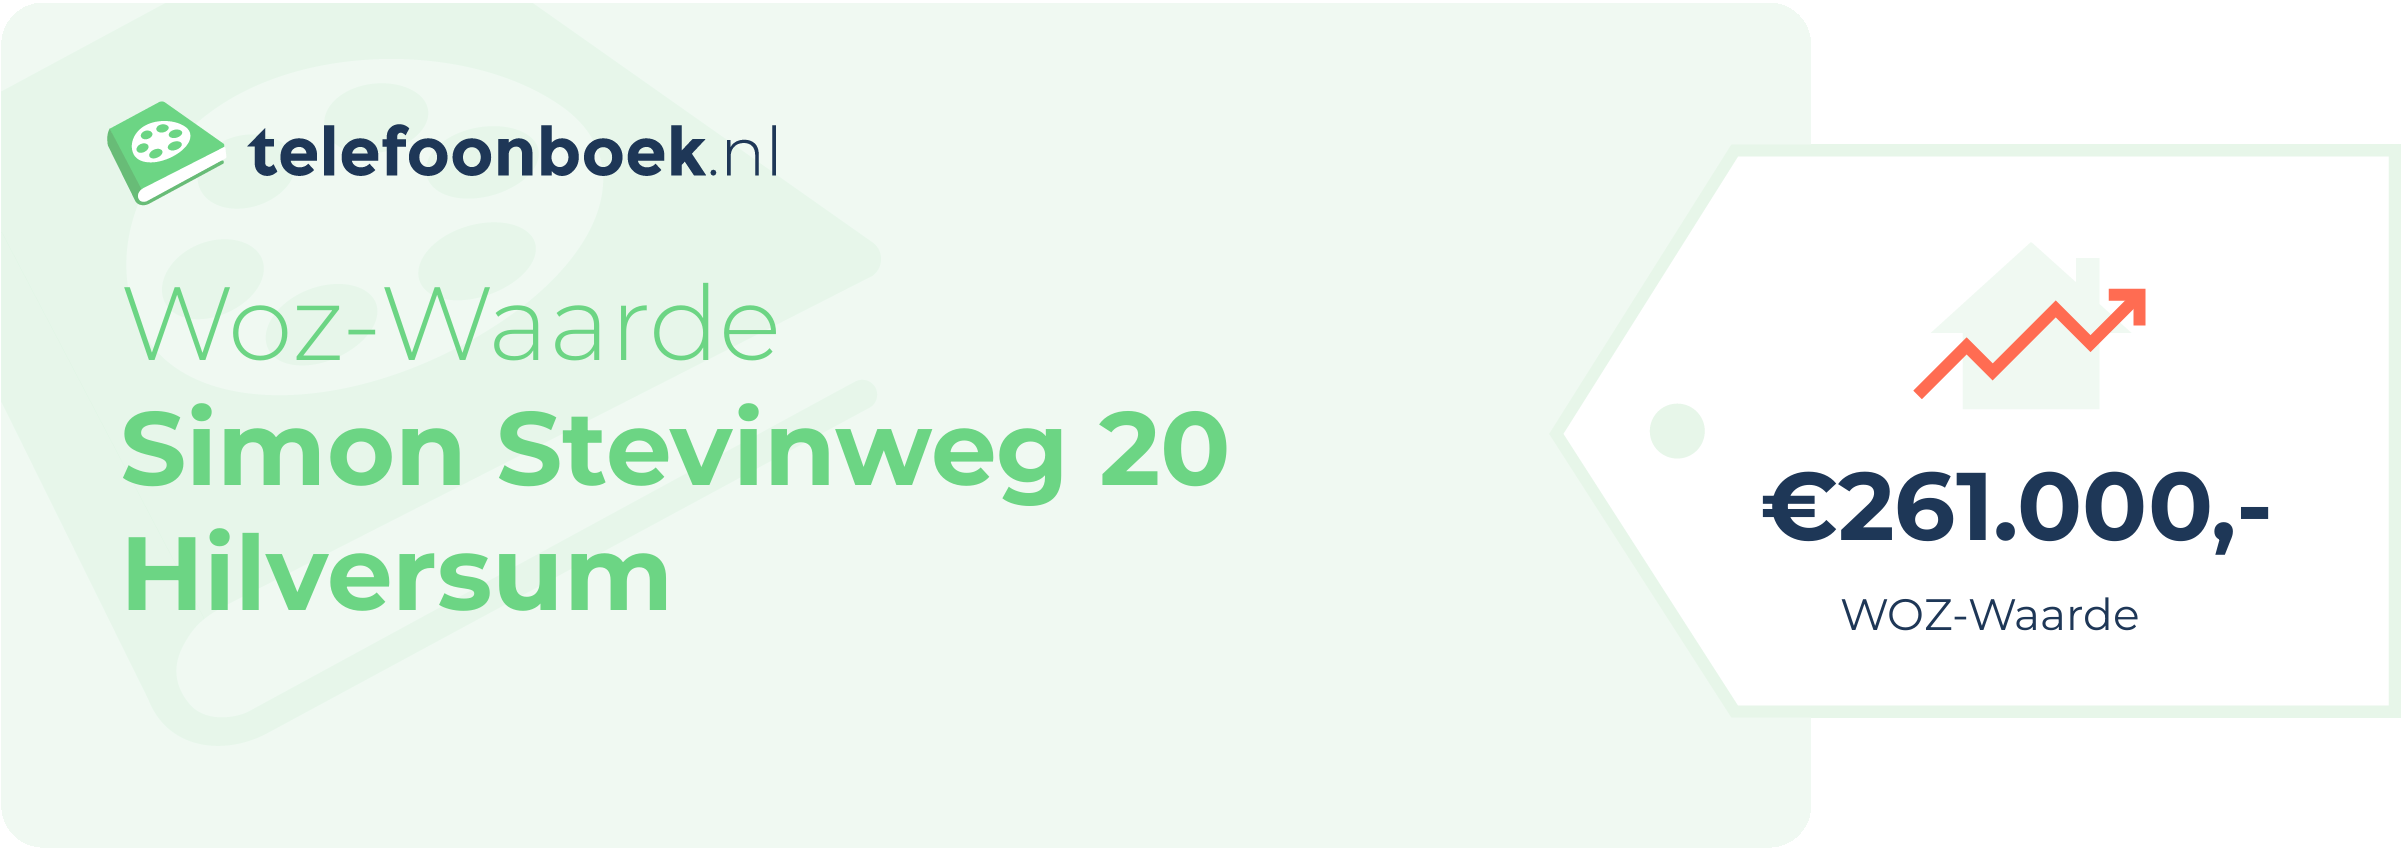 WOZ-waarde Simon Stevinweg 20 Hilversum